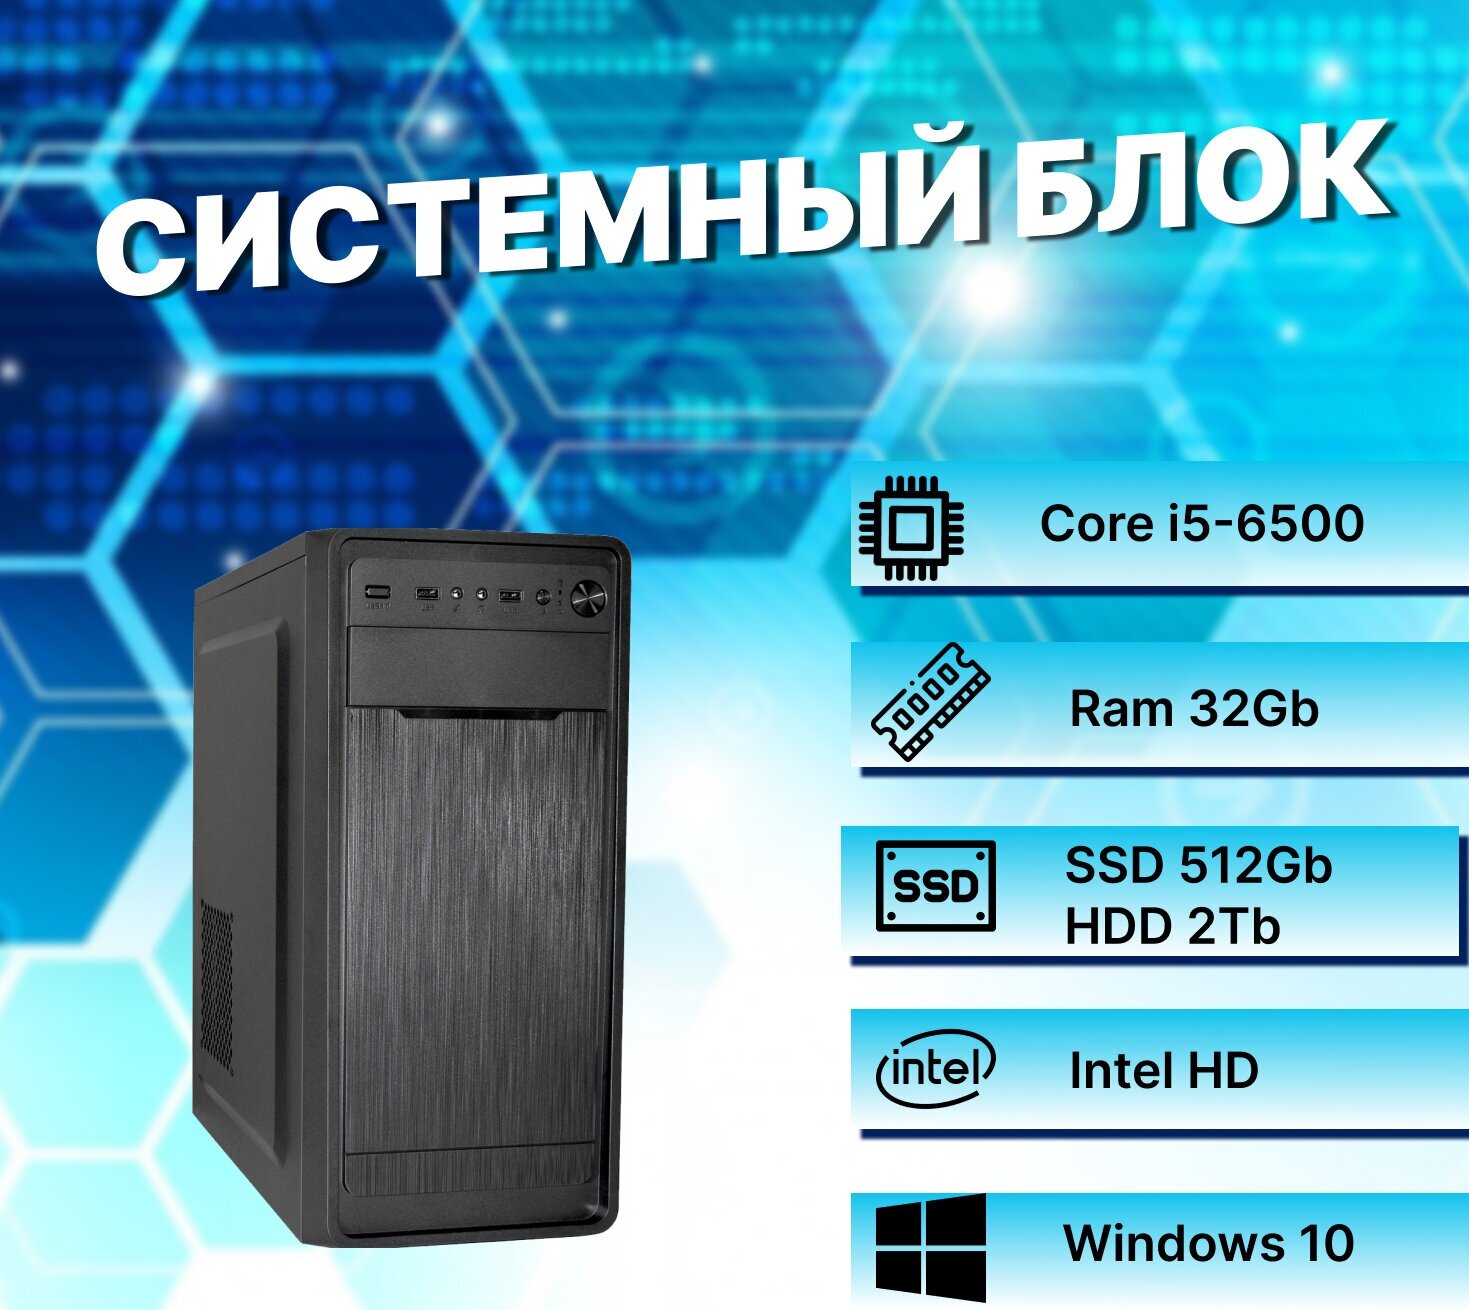 Системный блок Intel Core I5-6500 (3.2ГГц)/ RAM 32Gb/ SSD 512Gb/ HDD 2Tb/ Intel HD/ Windows 10 Pro